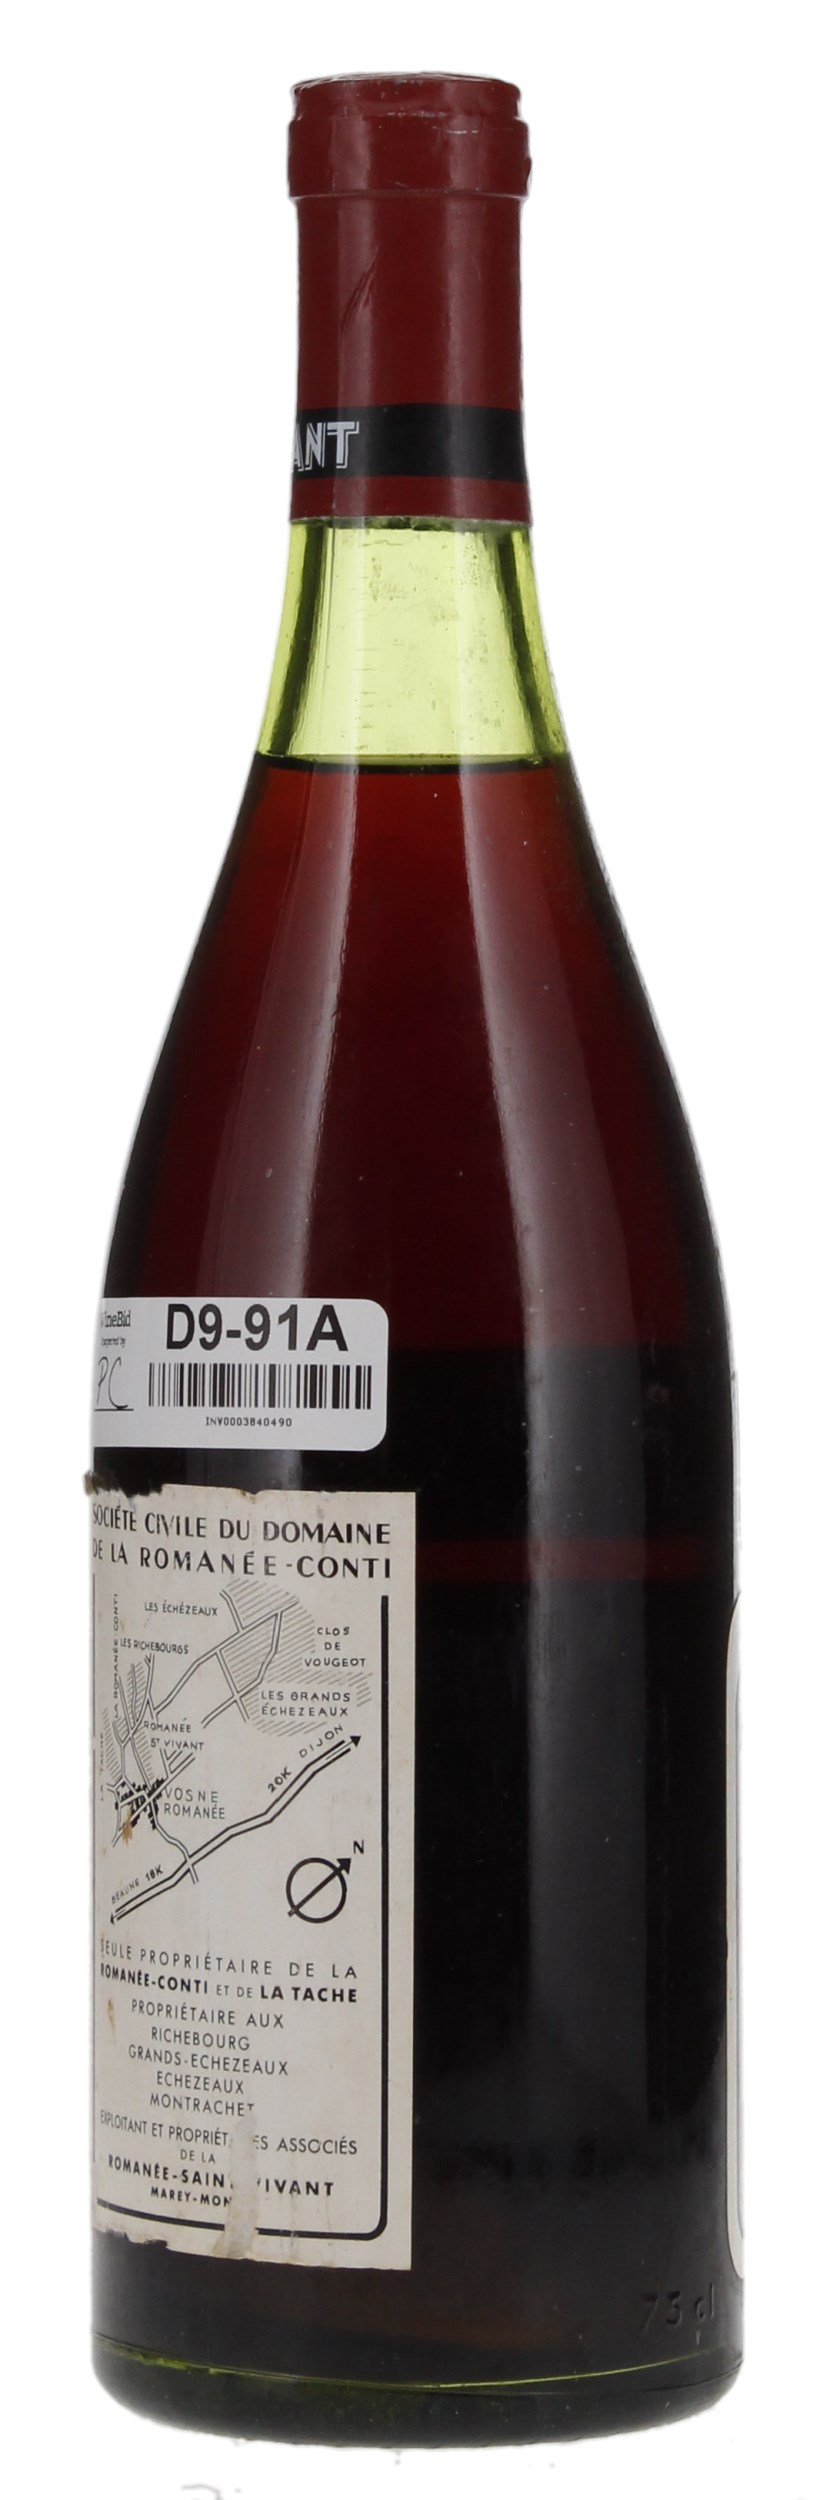 1976 Domaine de la Romanee-Conti Romanee-St. Vivant, 750ml